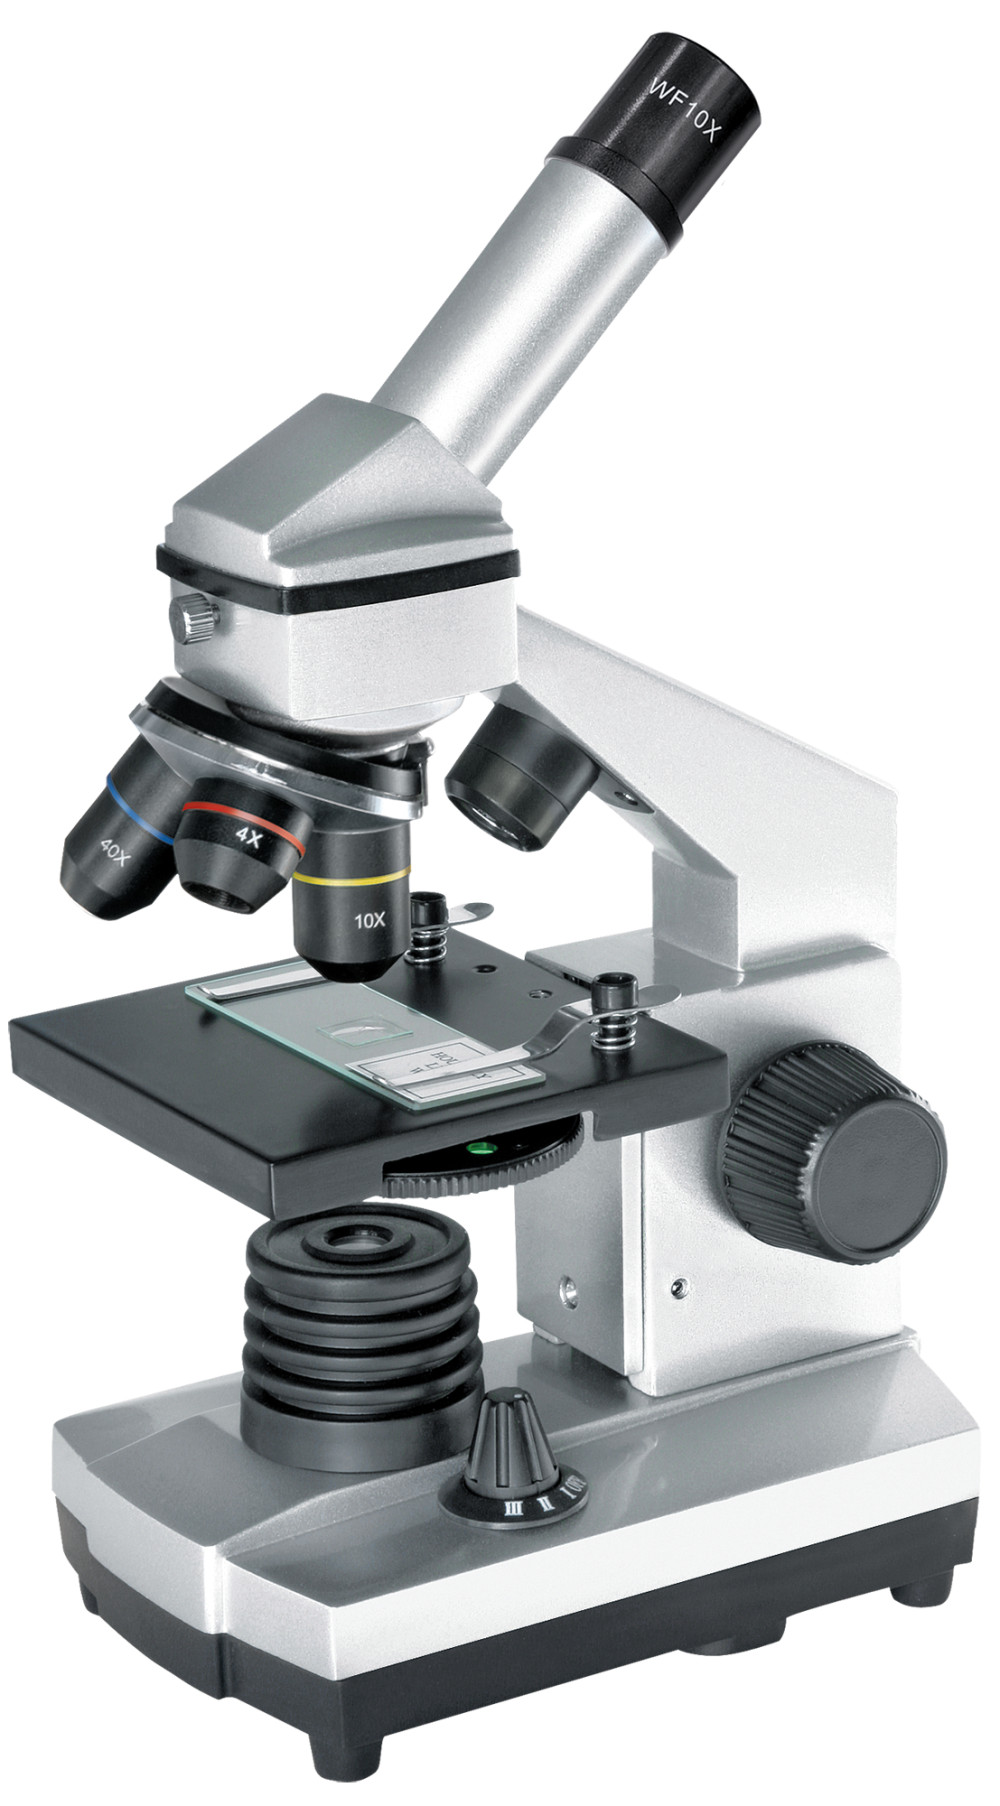 BRESSER JUNIOR Biolux CA 40x-1024x incl. Smartpho Microscope